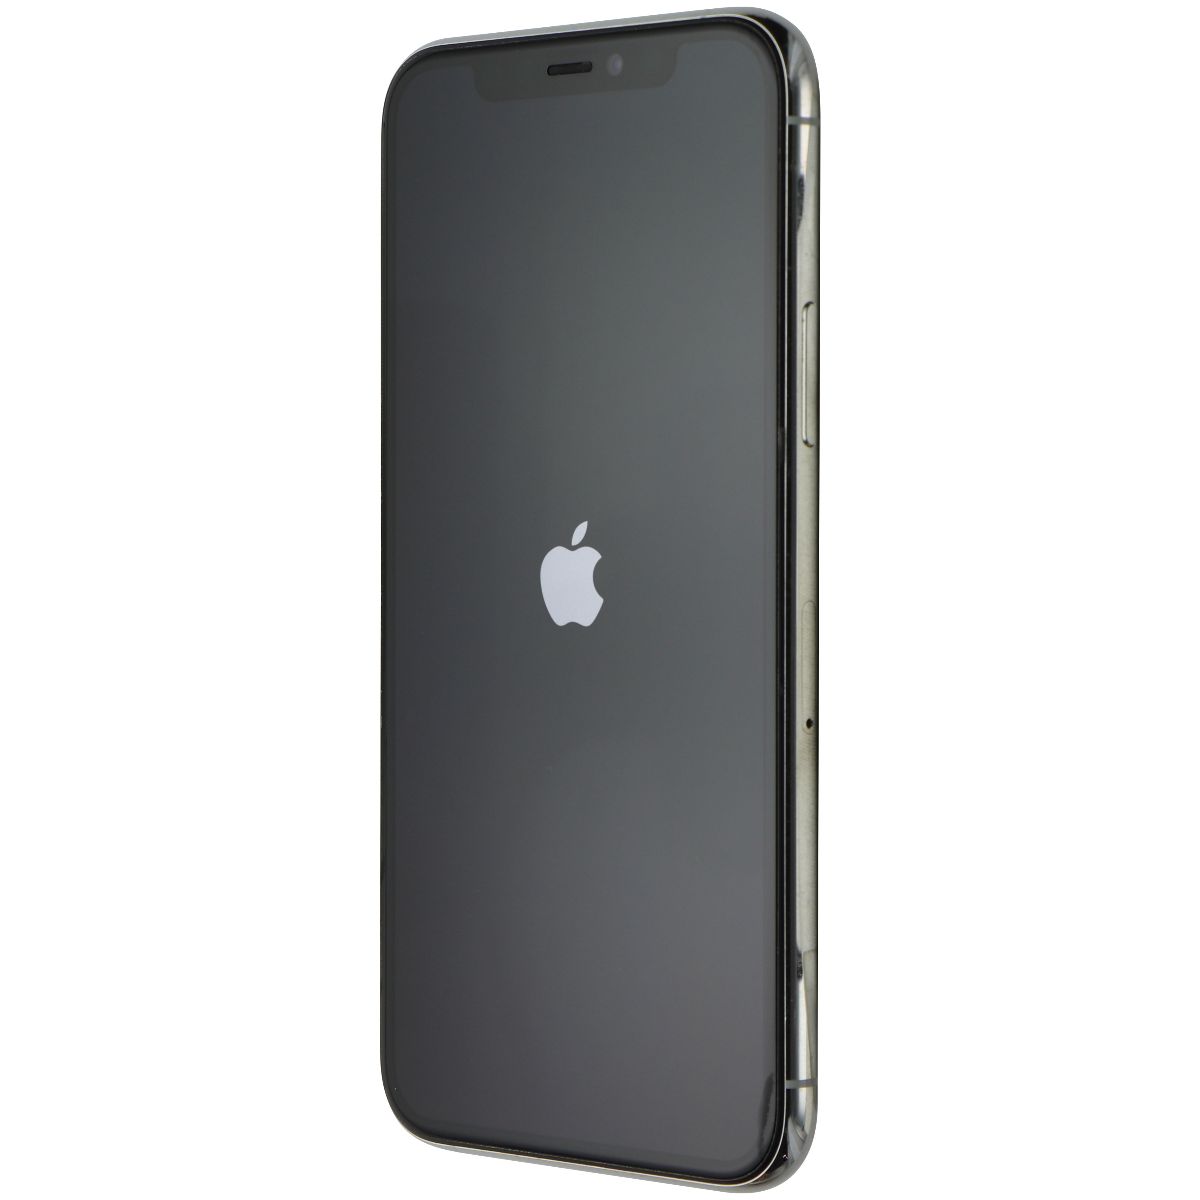 Apple iPhone 11 Pro (5.8-inch) Smartphone A2160 (Unlocked) - 64GB / Silver Cell Phones & Smartphones Apple    - Simple Cell Bulk Wholesale Pricing - USA Seller